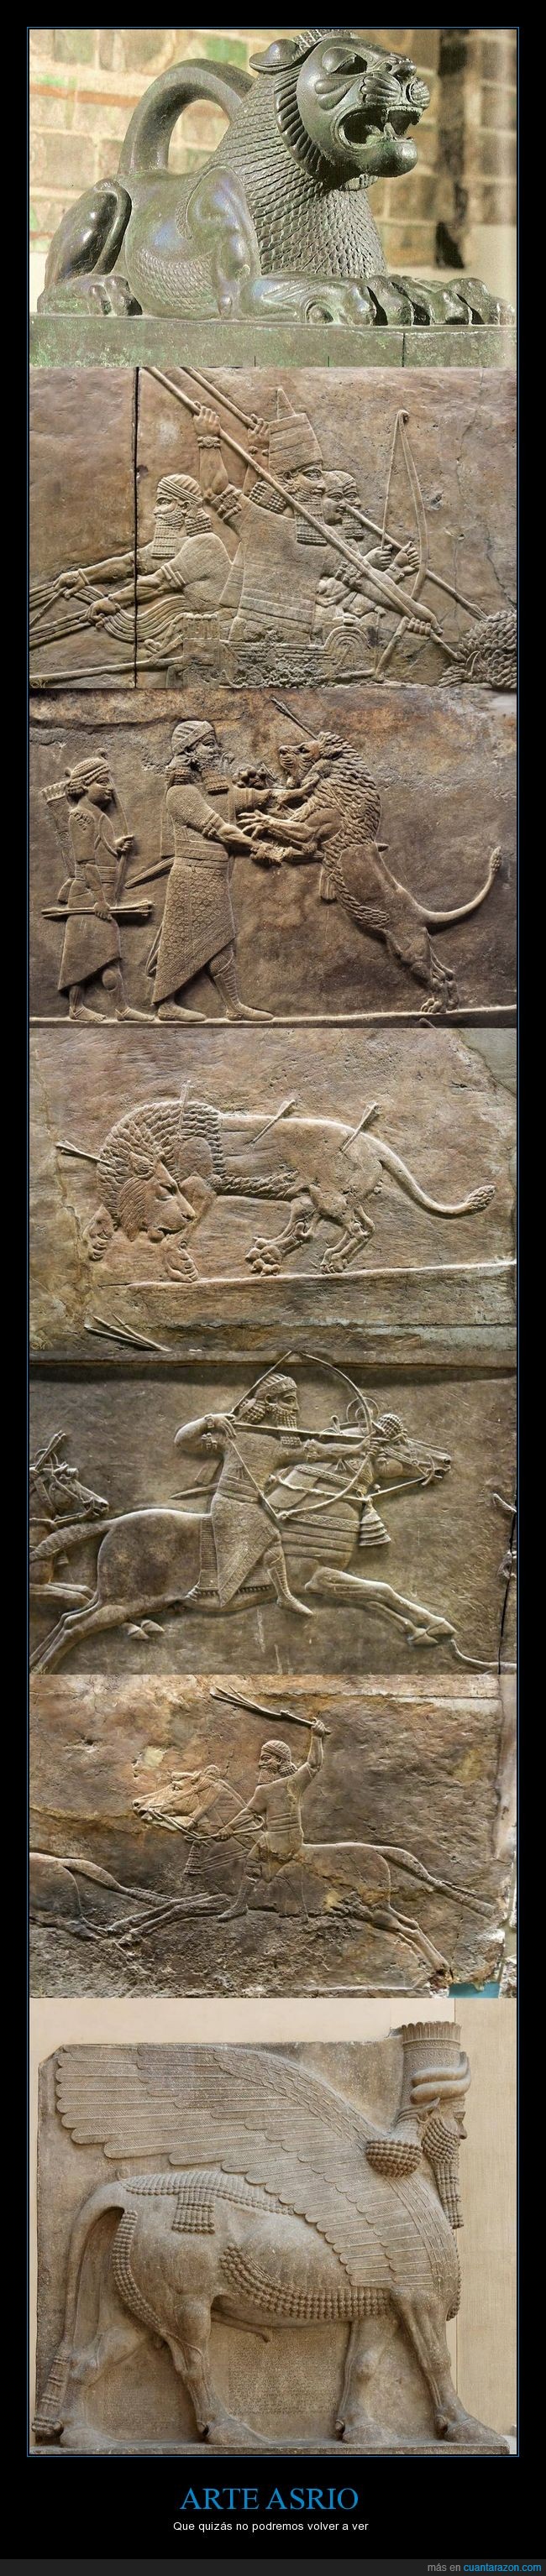 Arte,Asirio,Antigüedad,Mesopotamia,Caza,León,Tigre,Gato